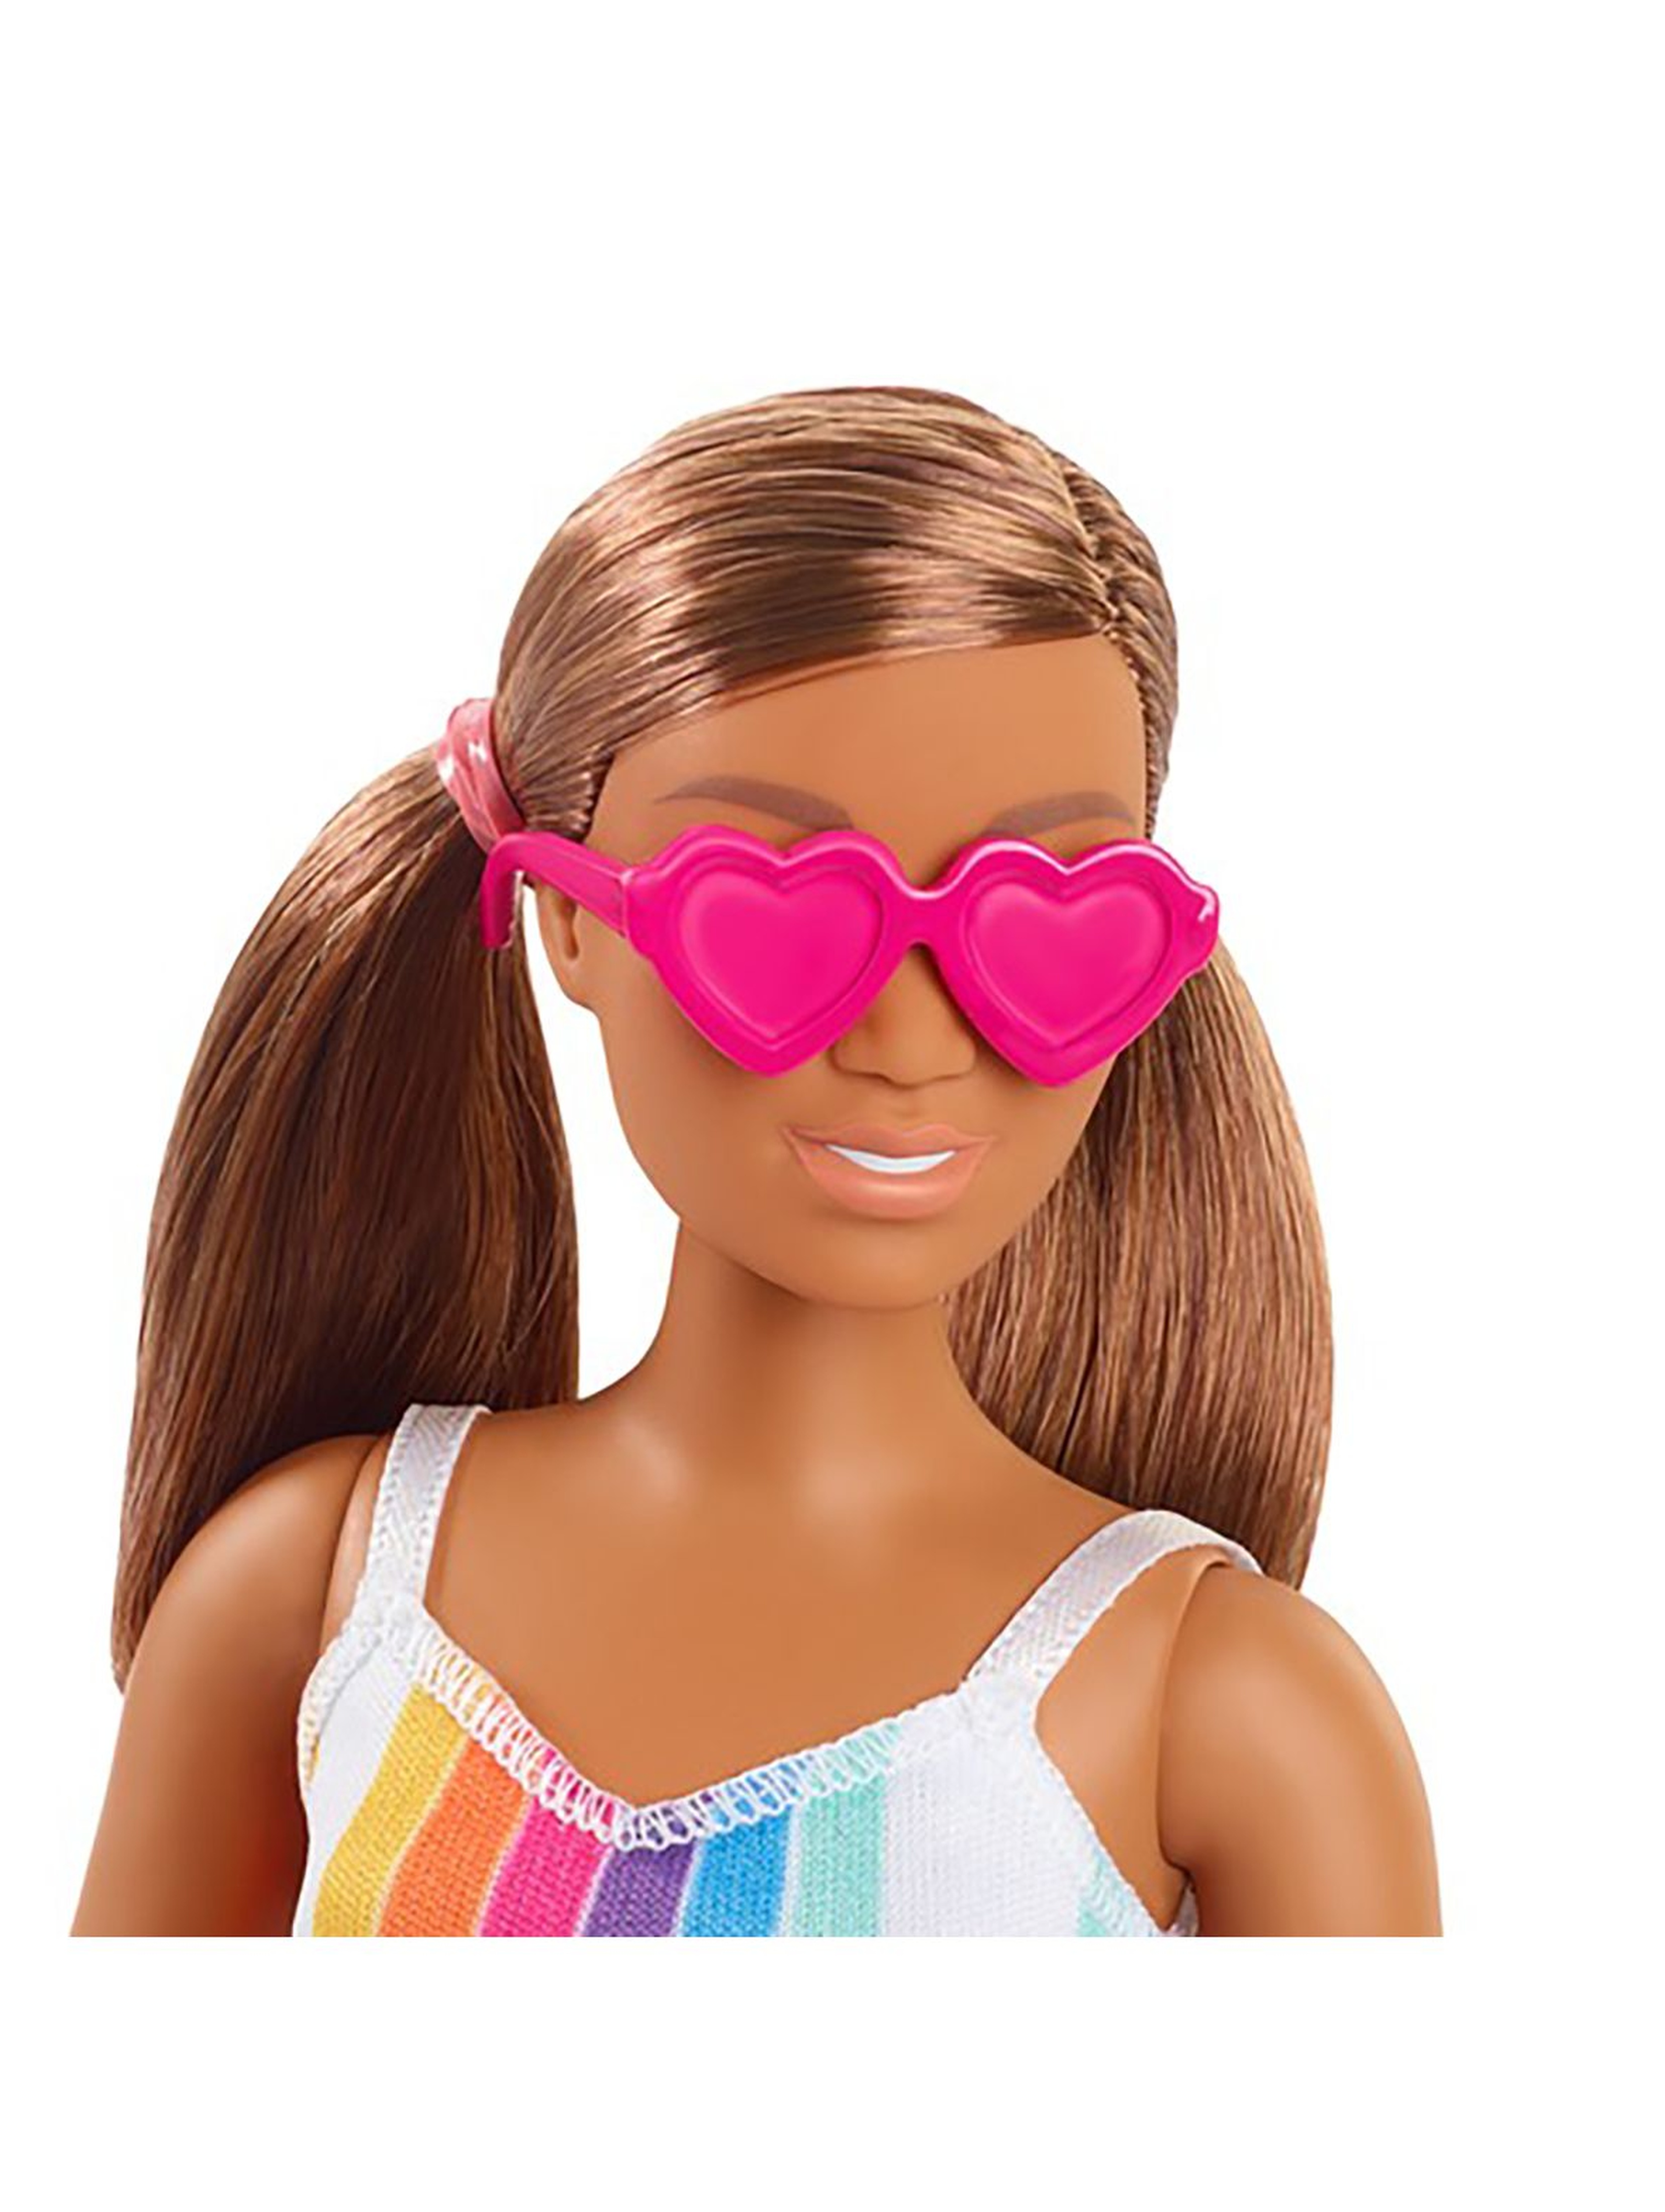 Barbie Loves the Ocean Lalka Sukienka w paski wiek 3+